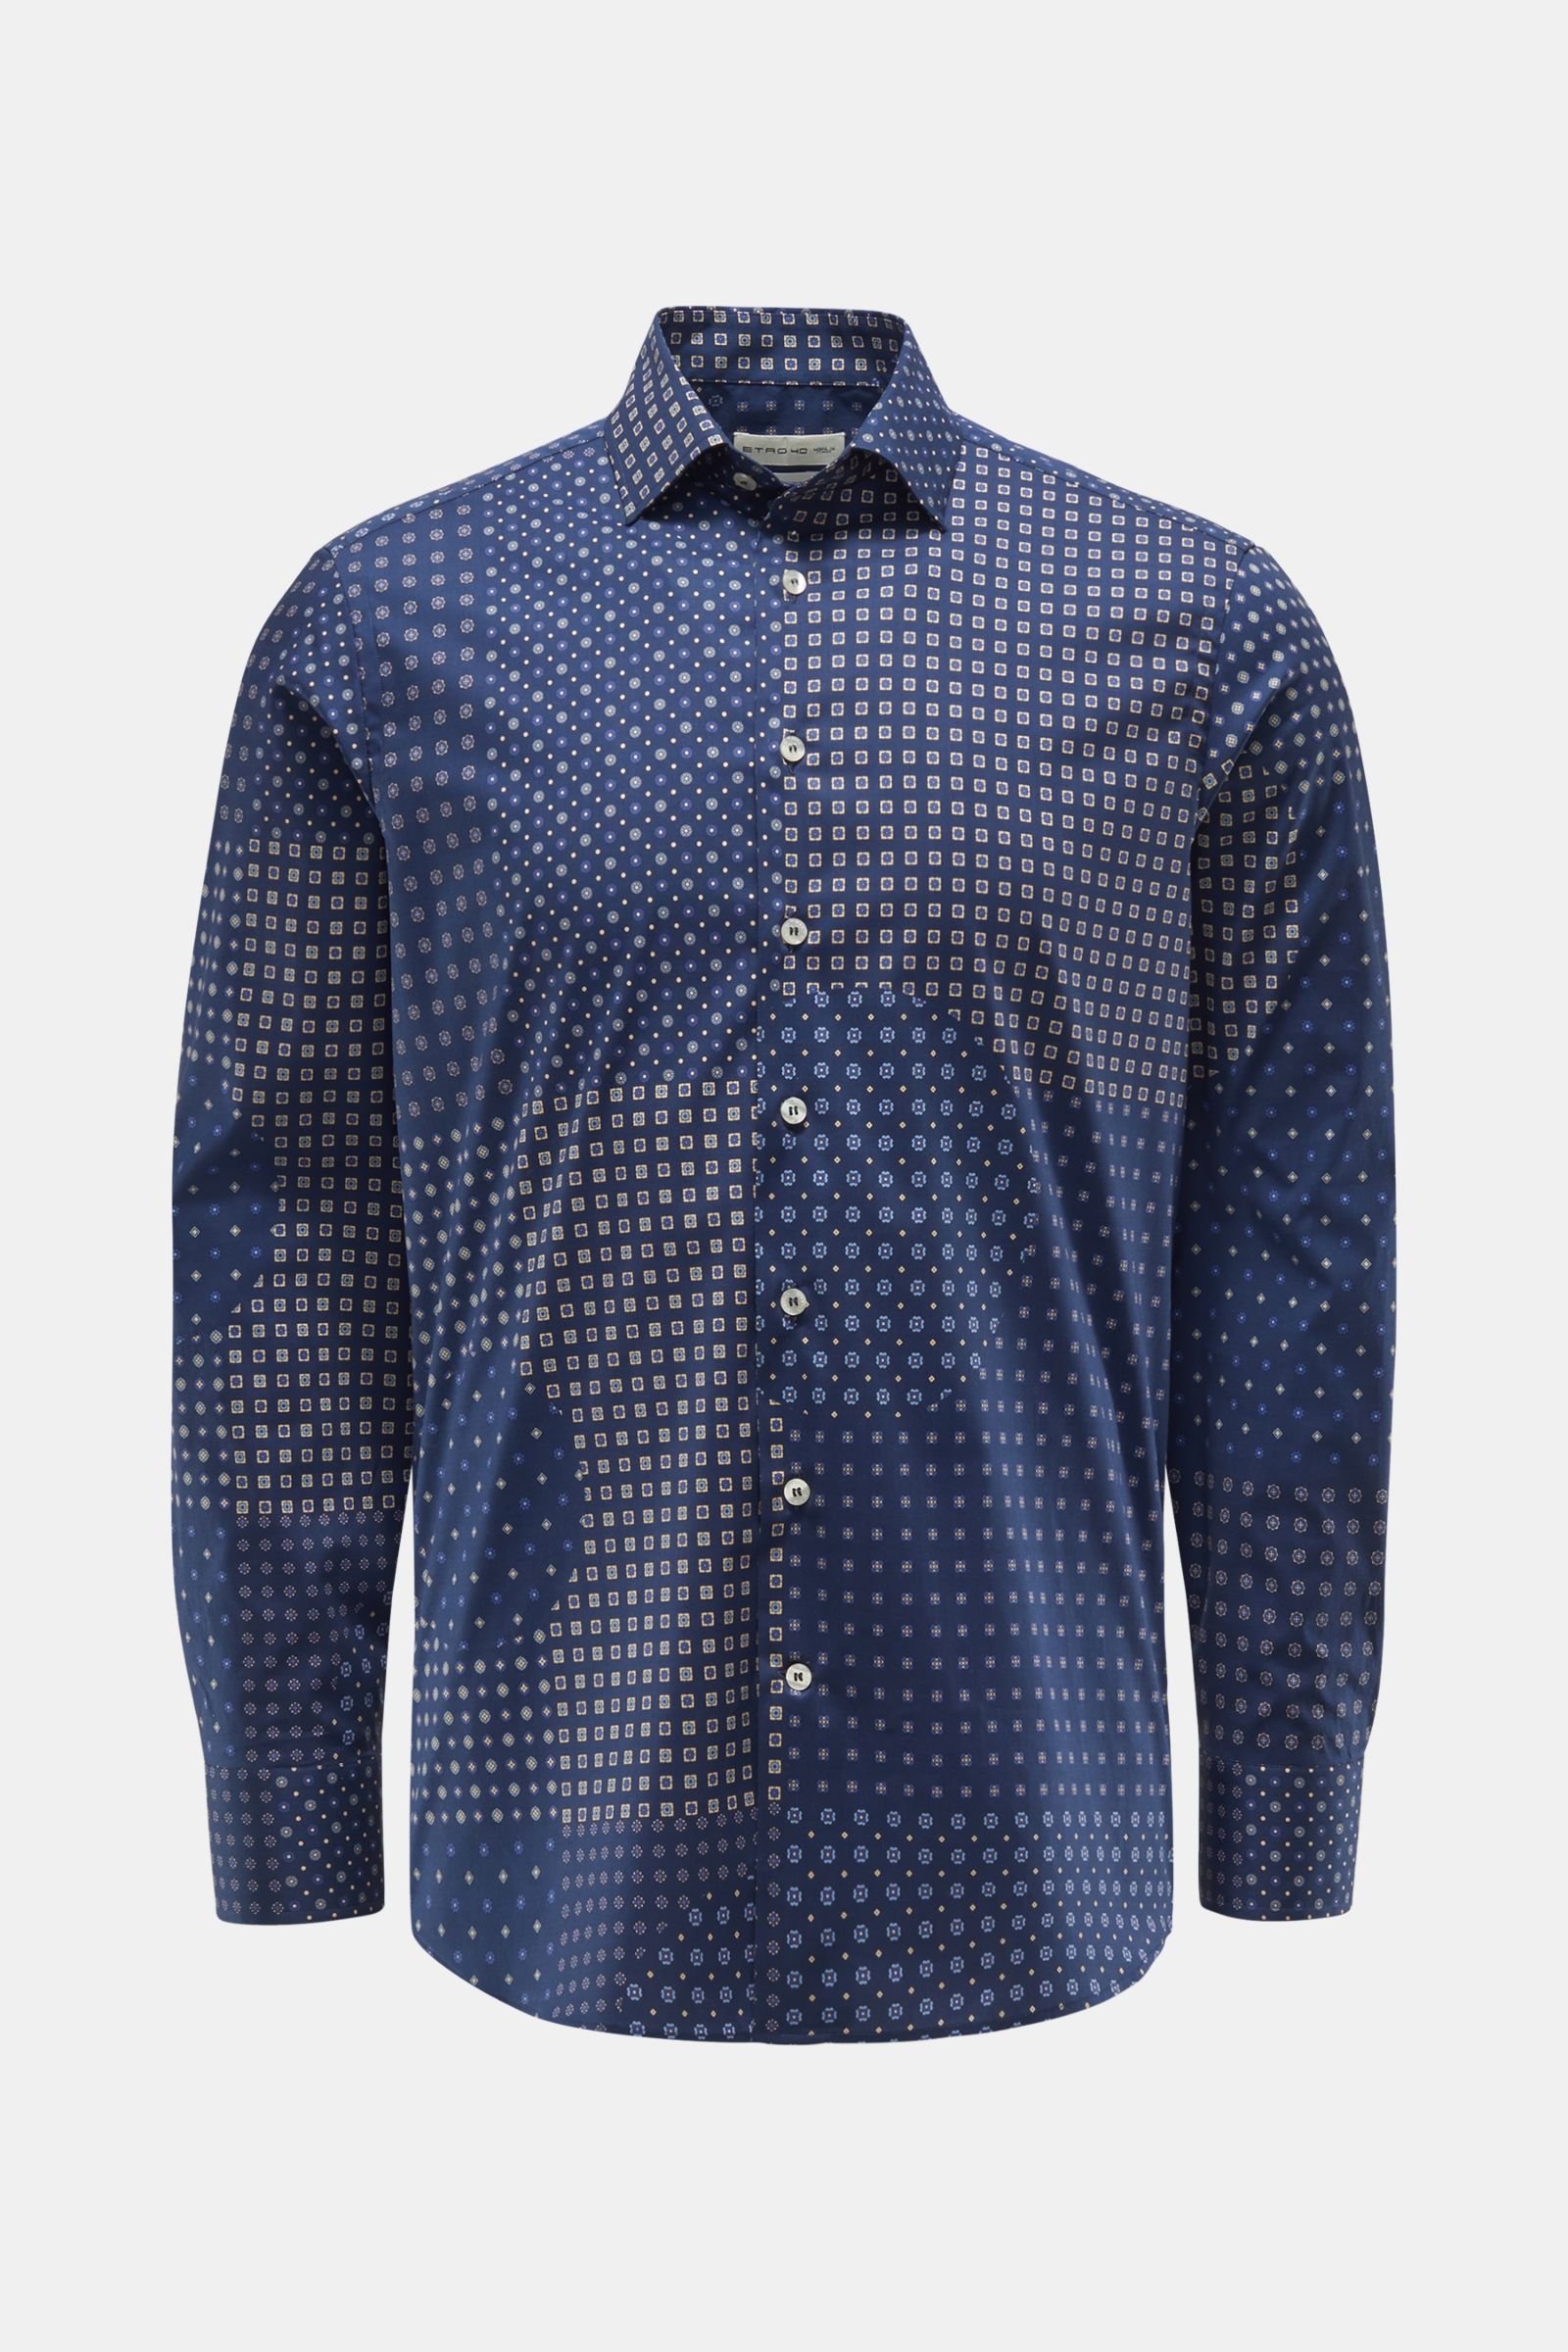 Casual shirt slim collar navy patterned